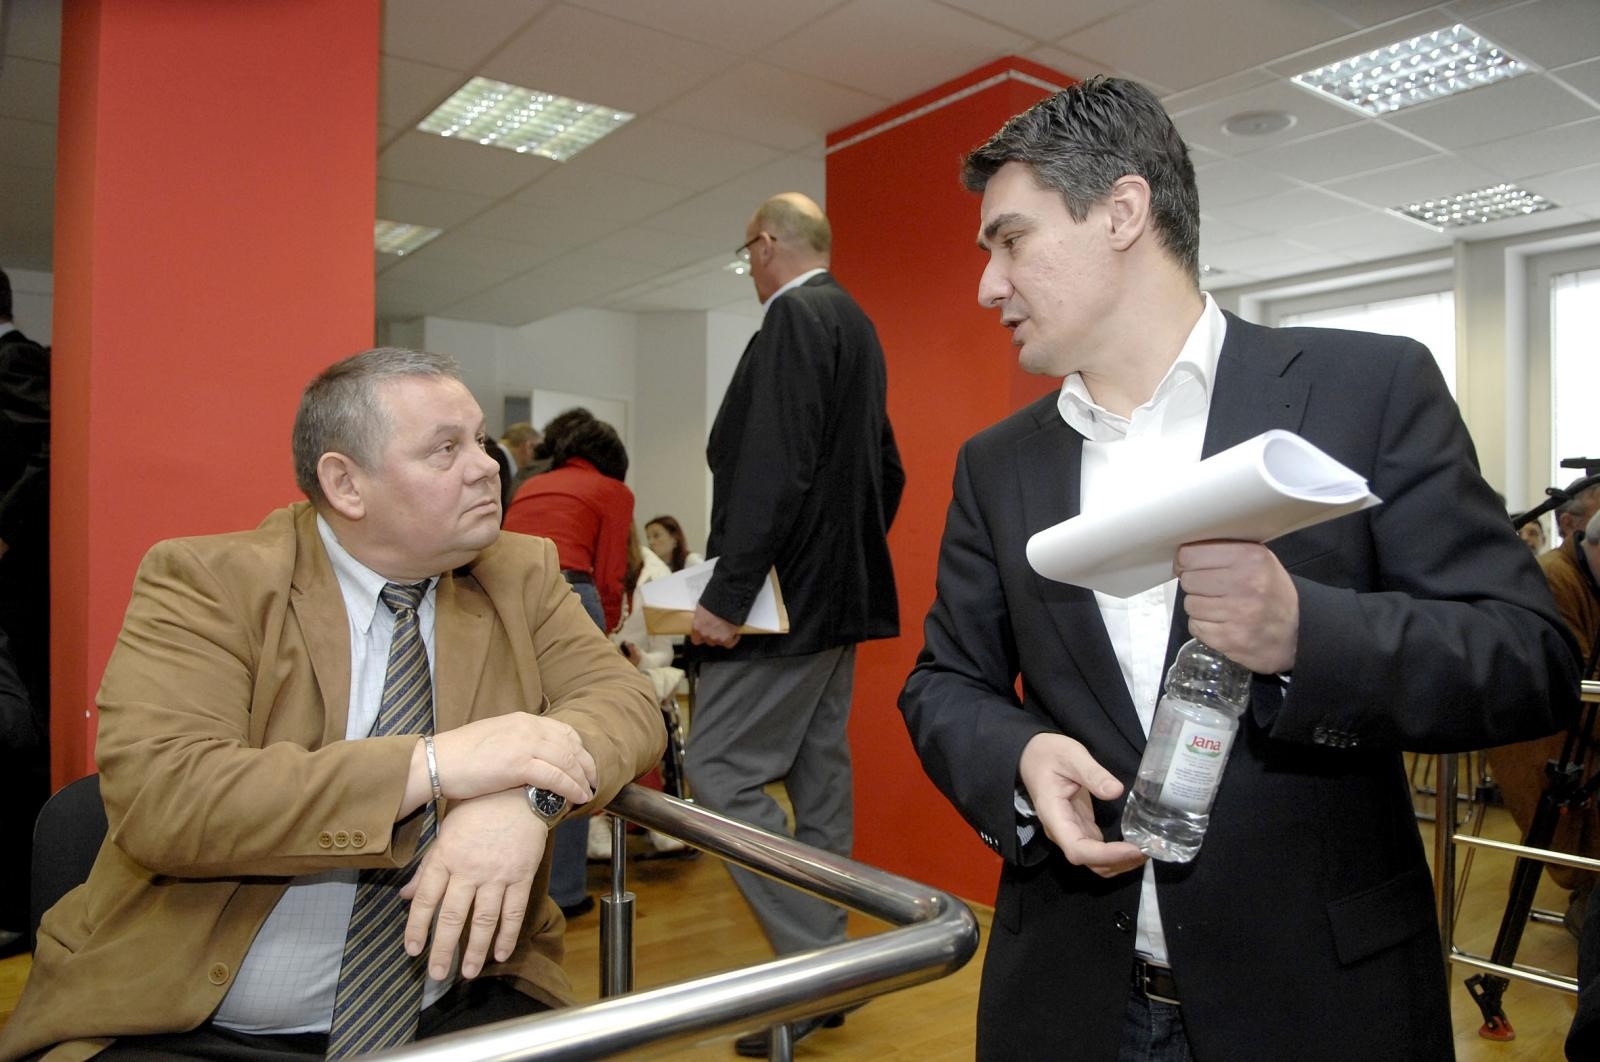 15.03.2008., Zagreb - Glavni odbor SDP-a. Mato Arlovic i Zoran Milanovic

Photo: Boris Scitar/Vecernji list/PIXSELL